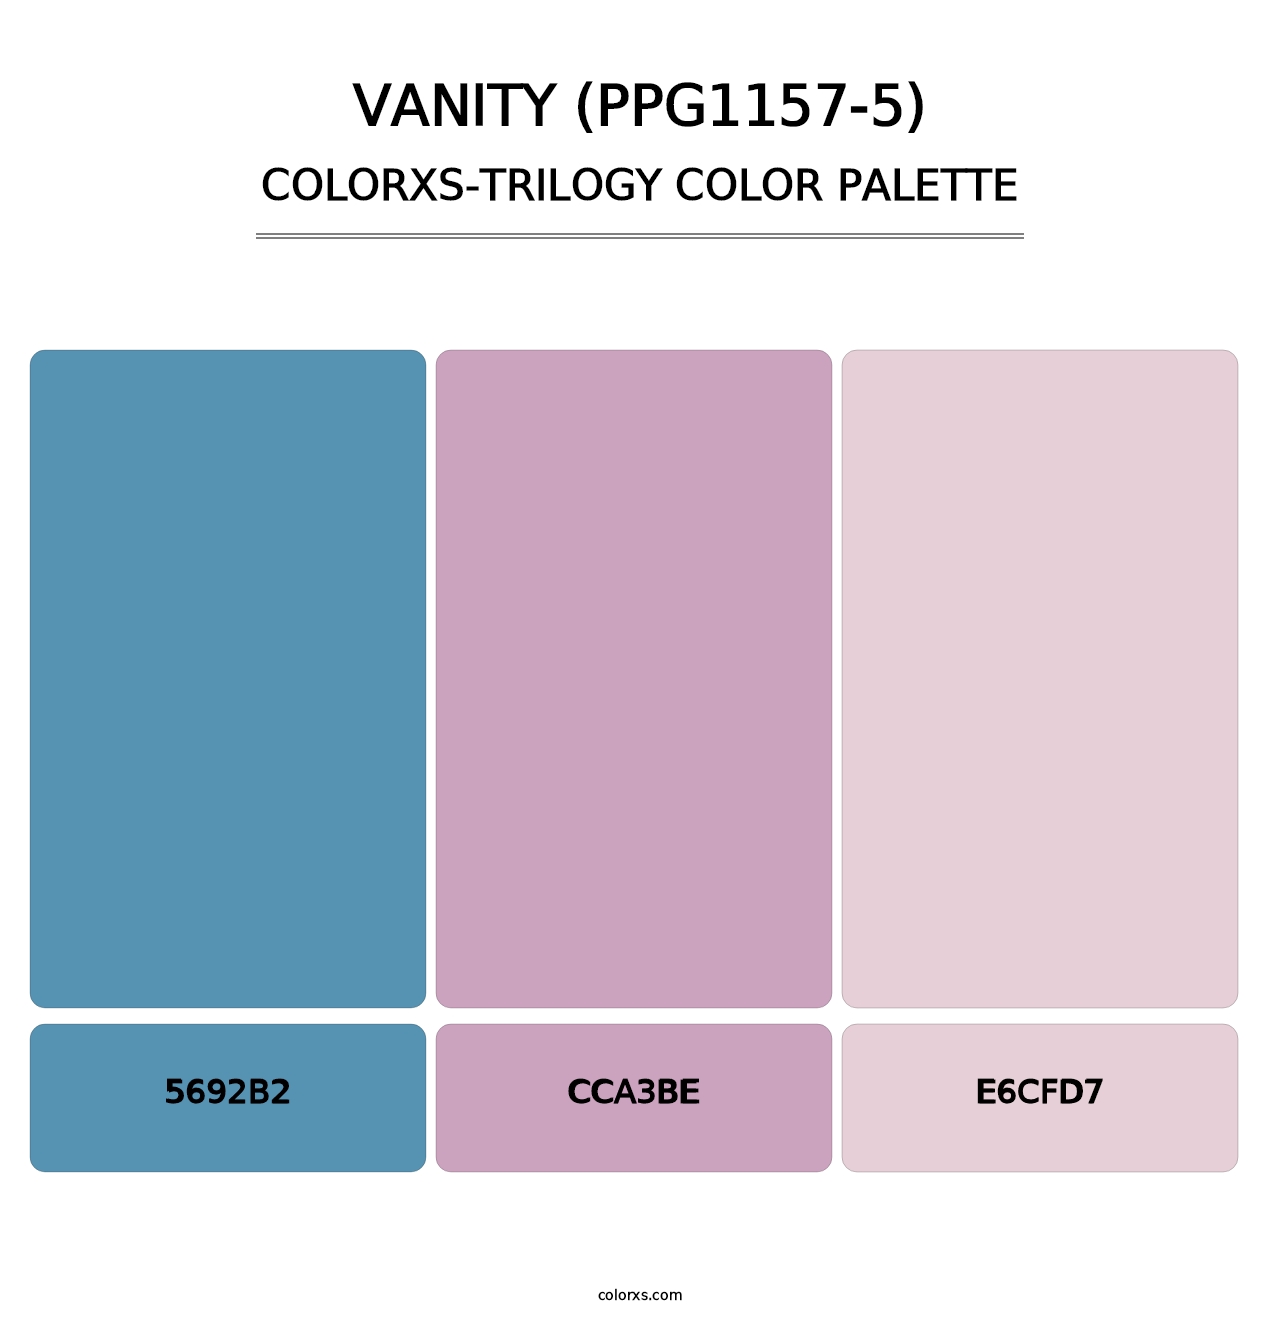 Vanity (PPG1157-5) - Colorxs Trilogy Palette